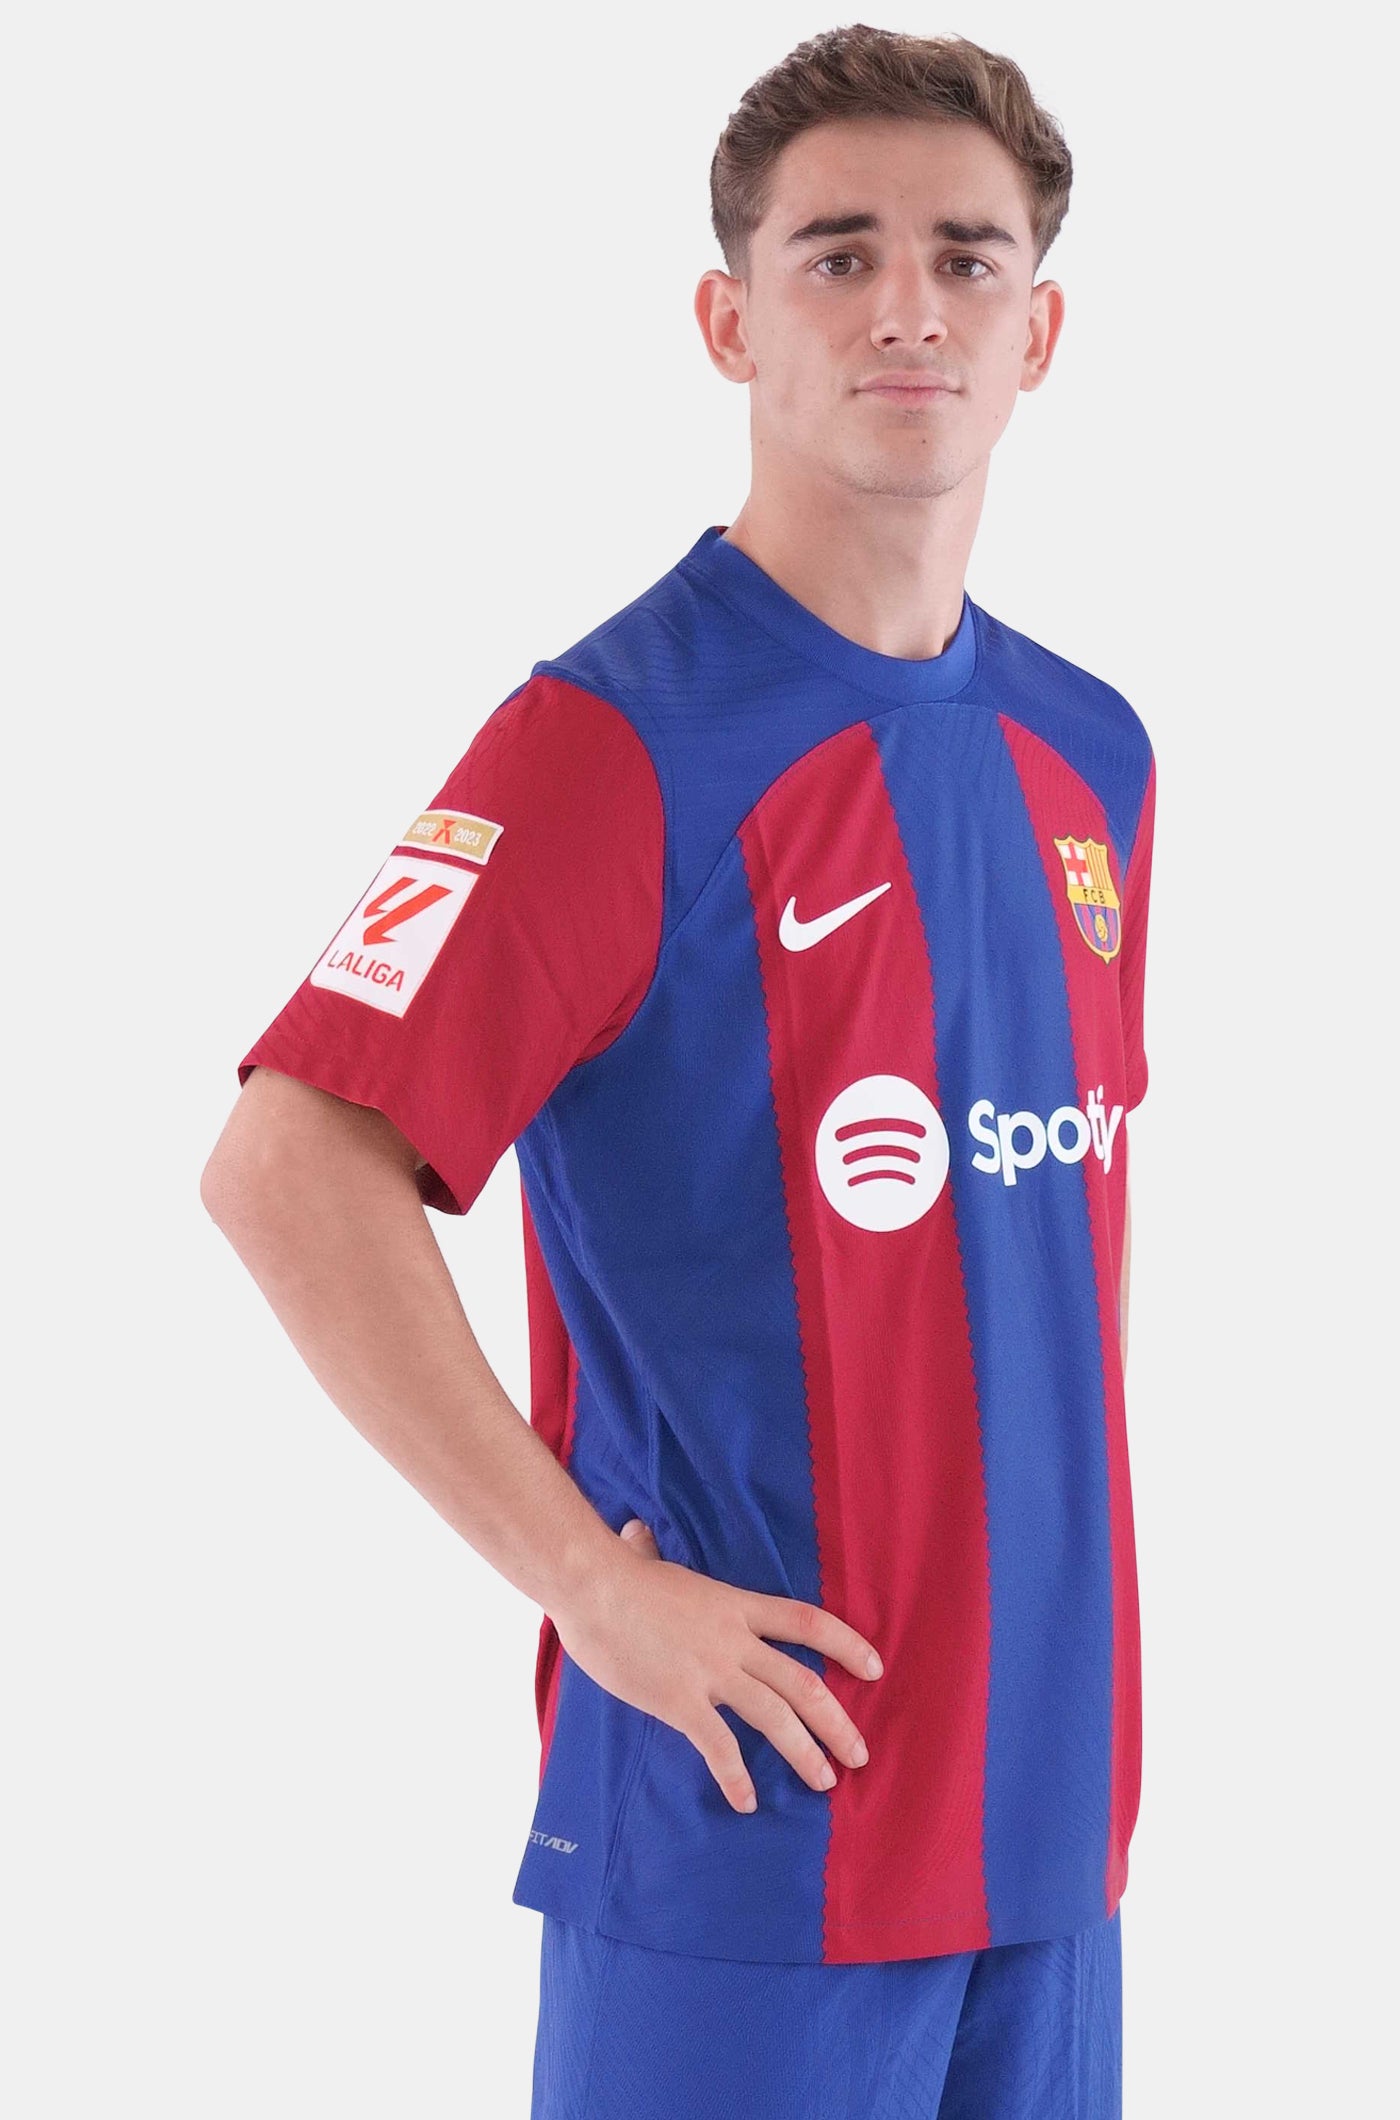 LFP FC Barcelona home shirt 23/24 Player's Edition - GAVI